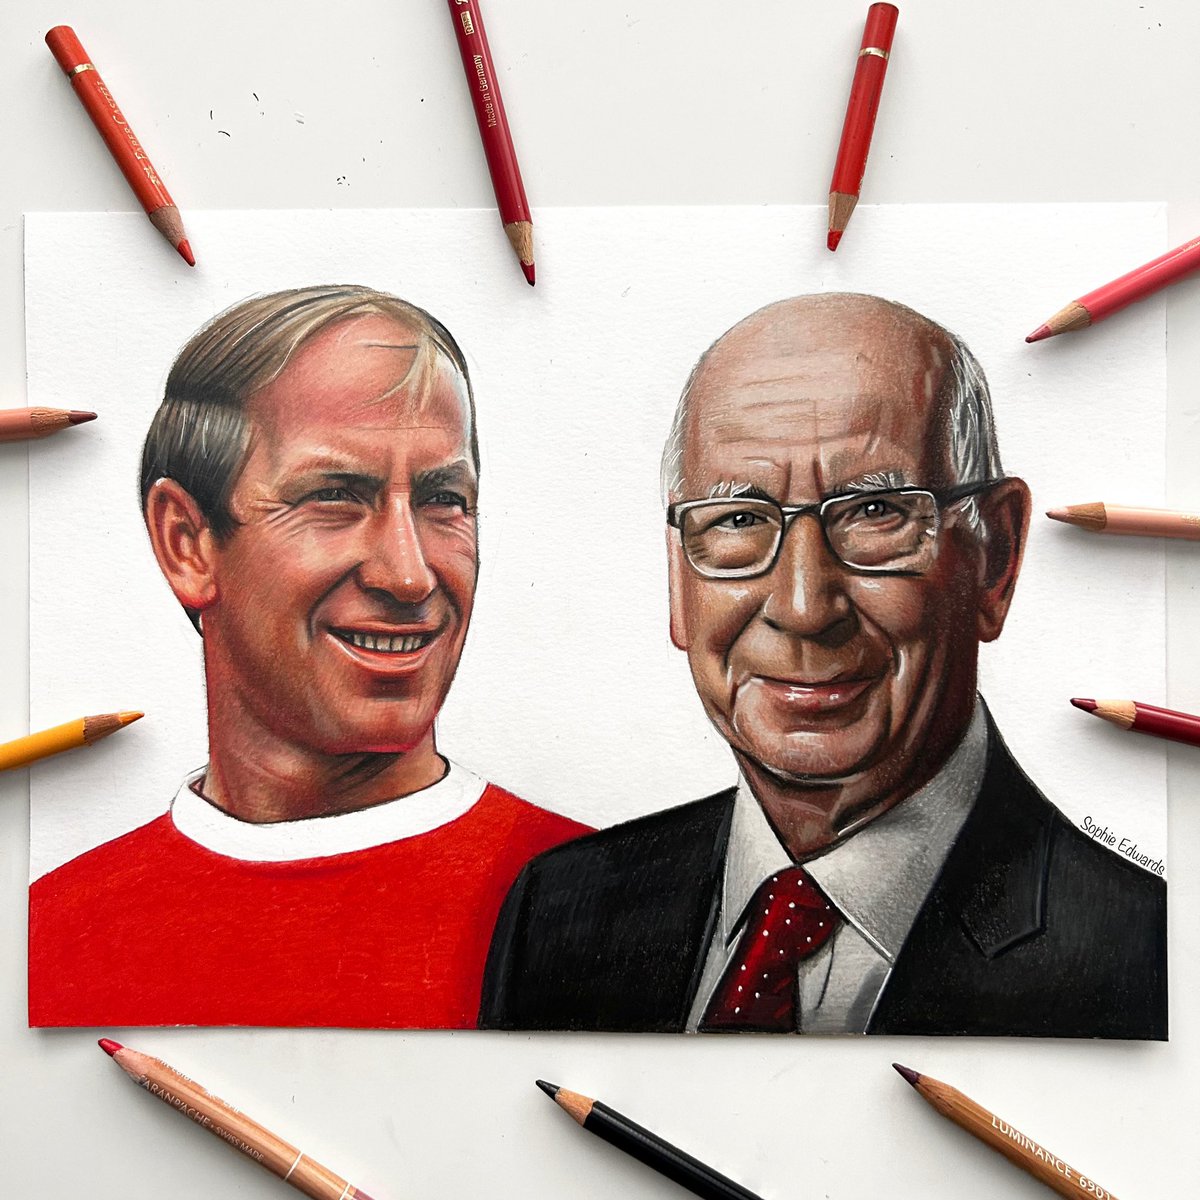 Drawing I did of Sir Bobby Charlton ✏️